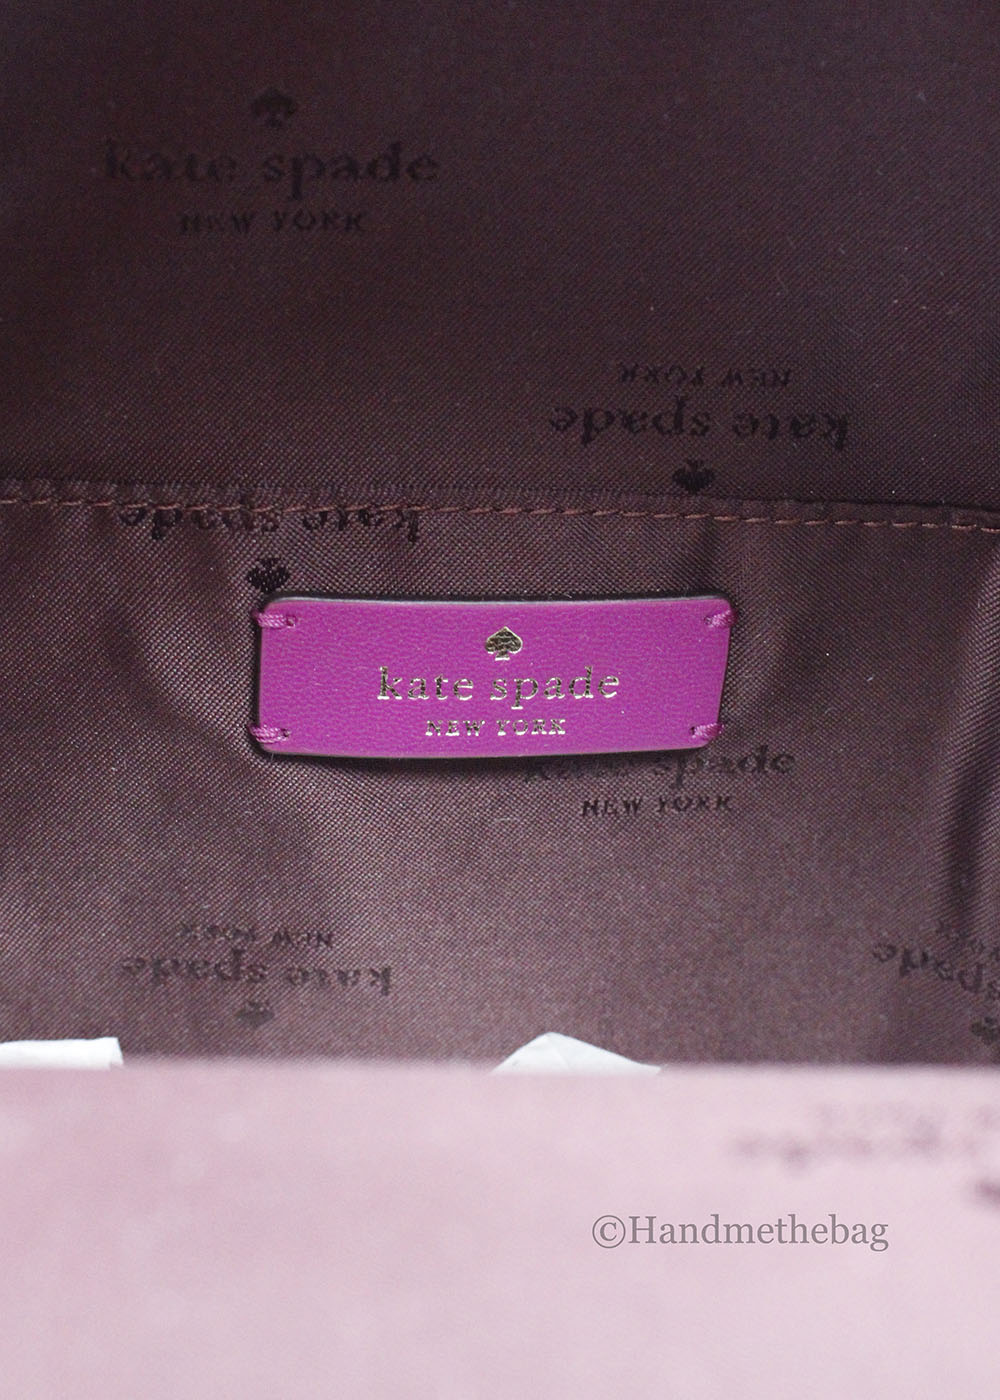 Kate Spade Schuyler Mini Baja Rose PVC Leather Backpack